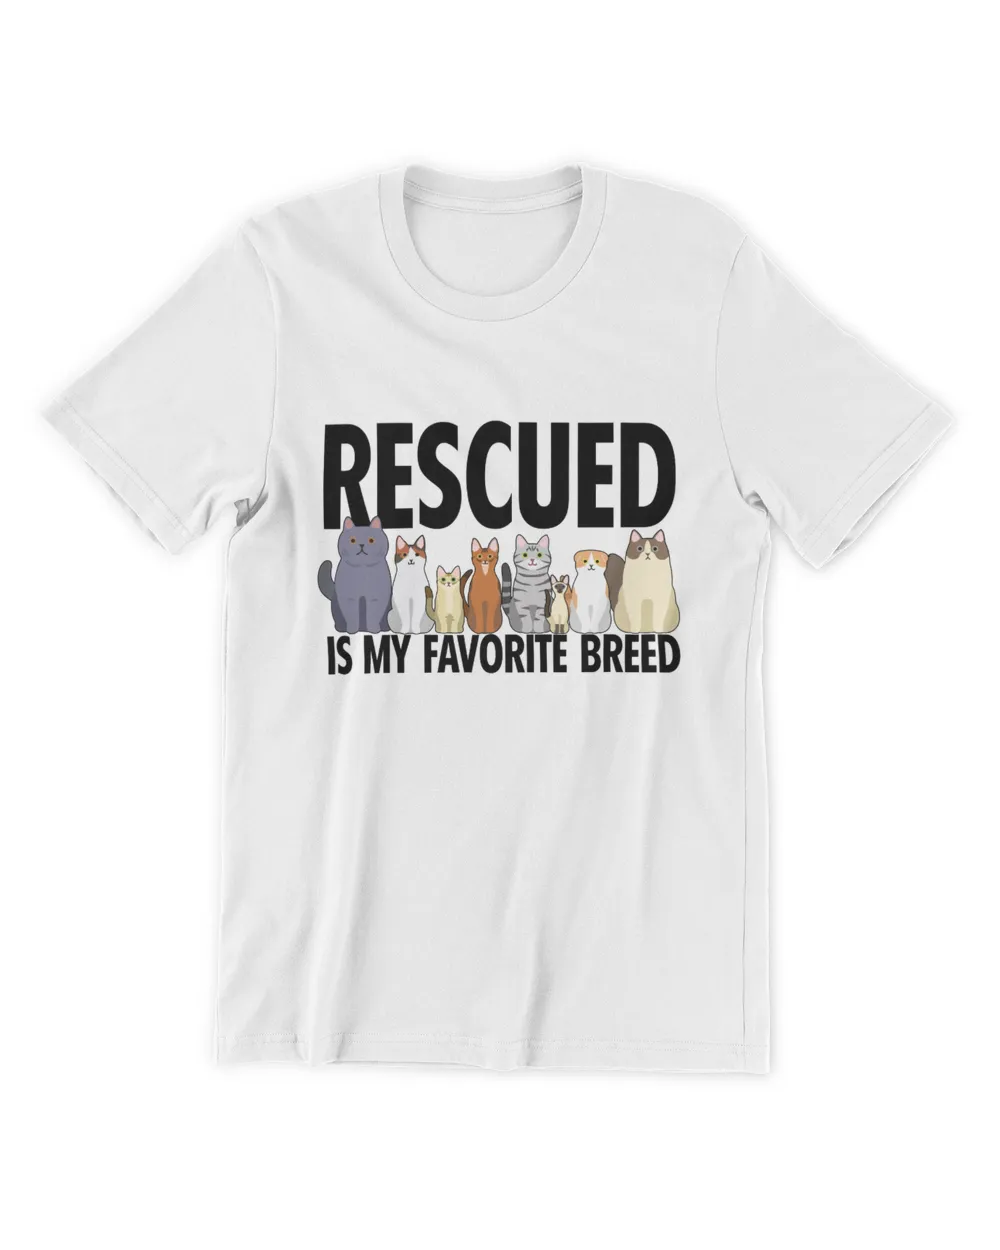 Rescued is my favorite breed tshirt